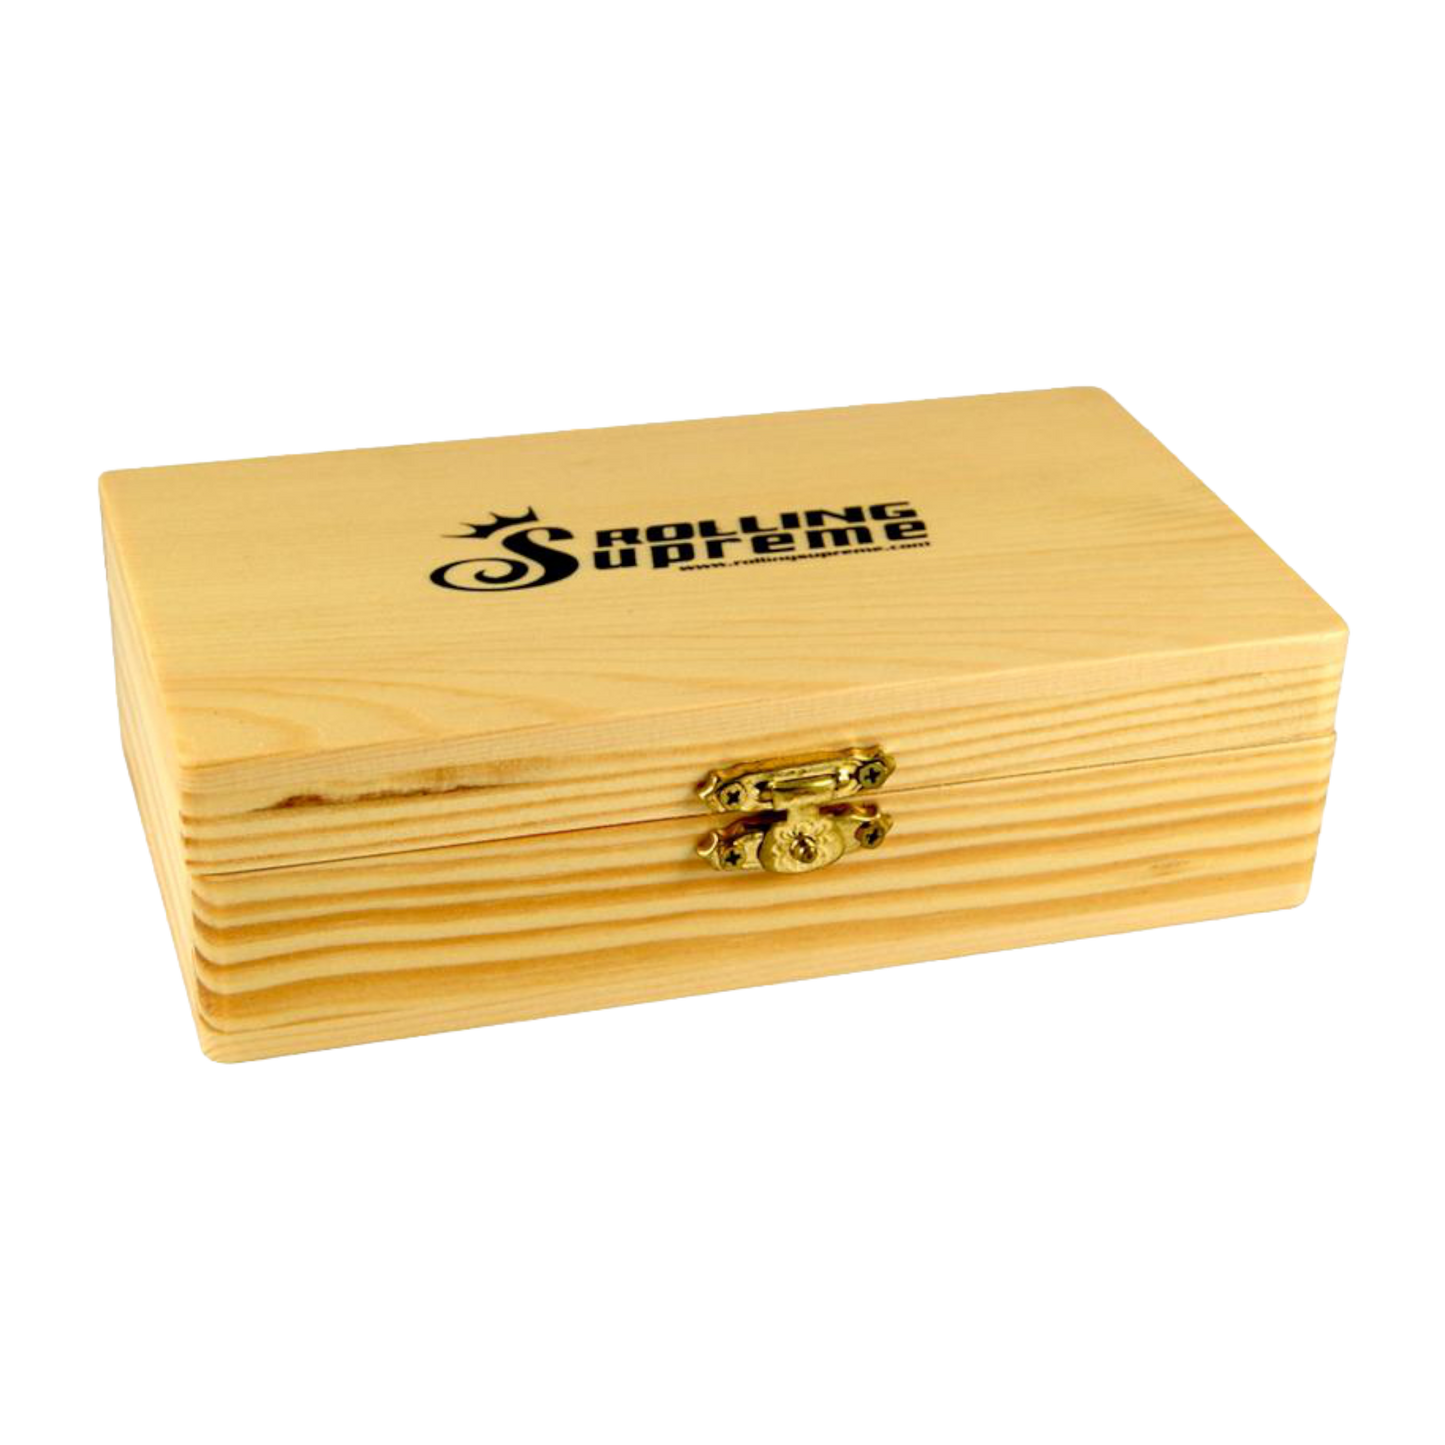 Rolling Supreme Holz-Box, 155 x 85 x 48 mm